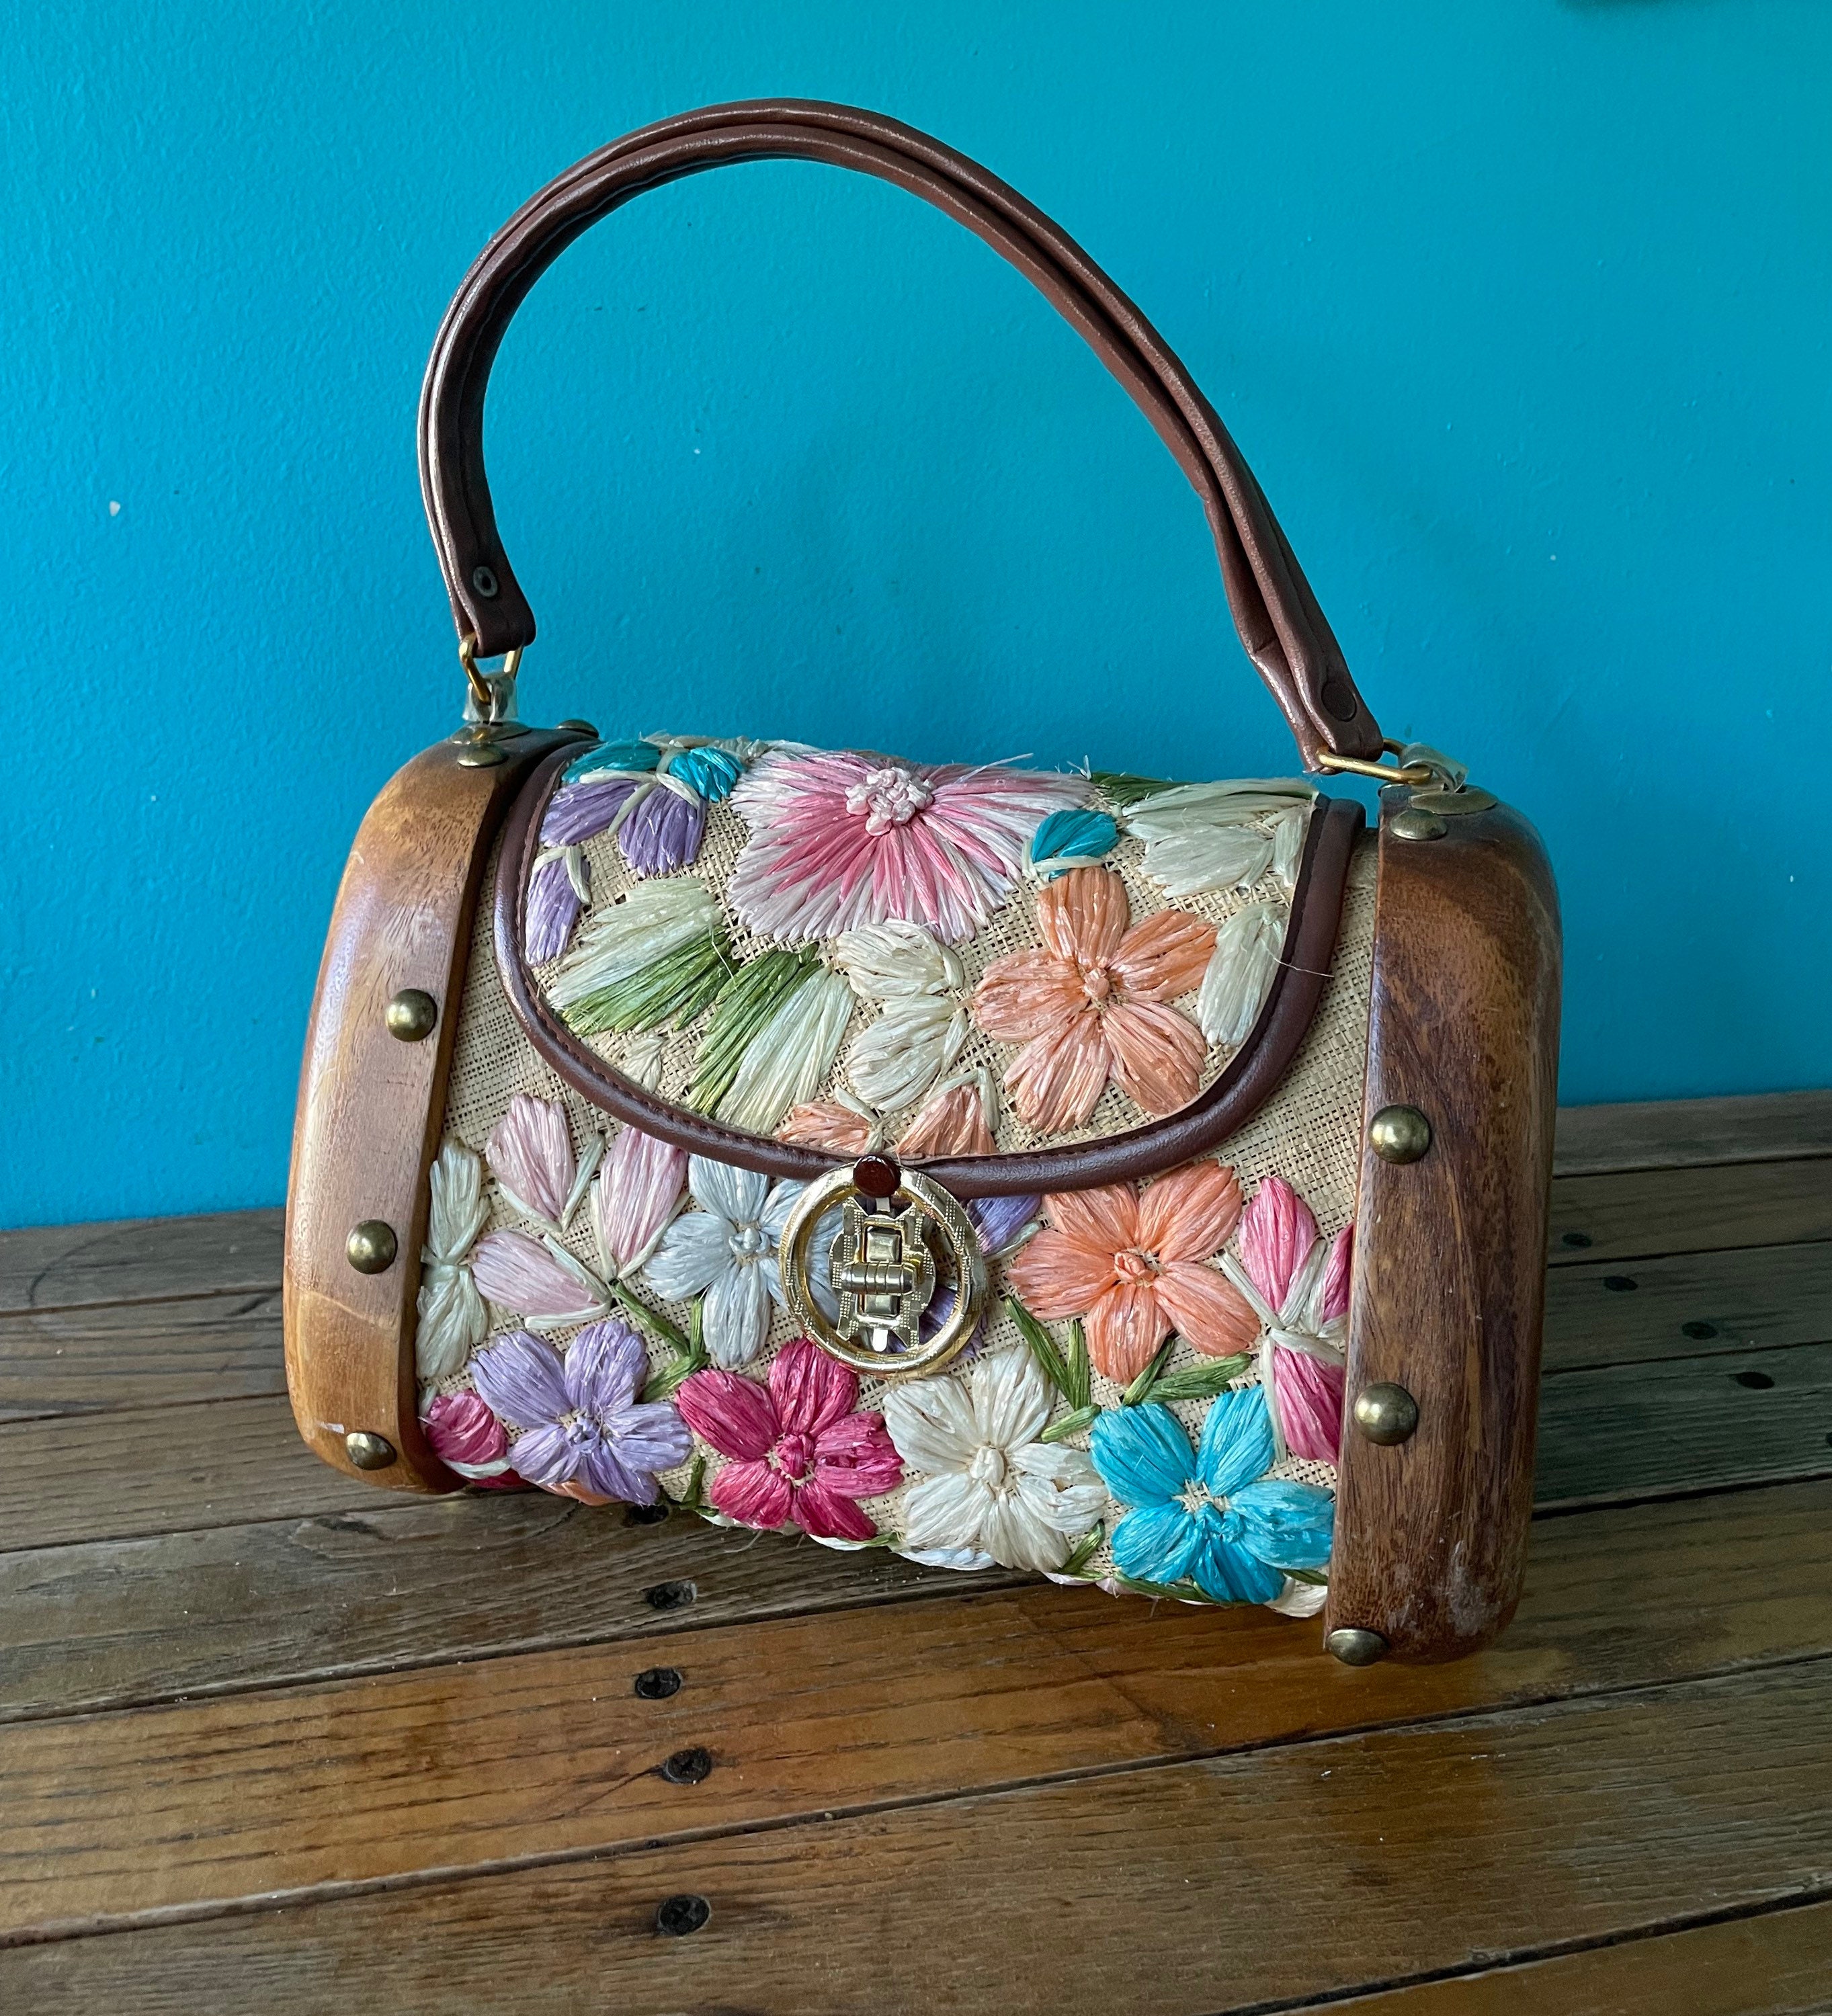 Vintage Clutch Bag Purse Made in Japan Wood Handle Soft Straw Handbag 1950's